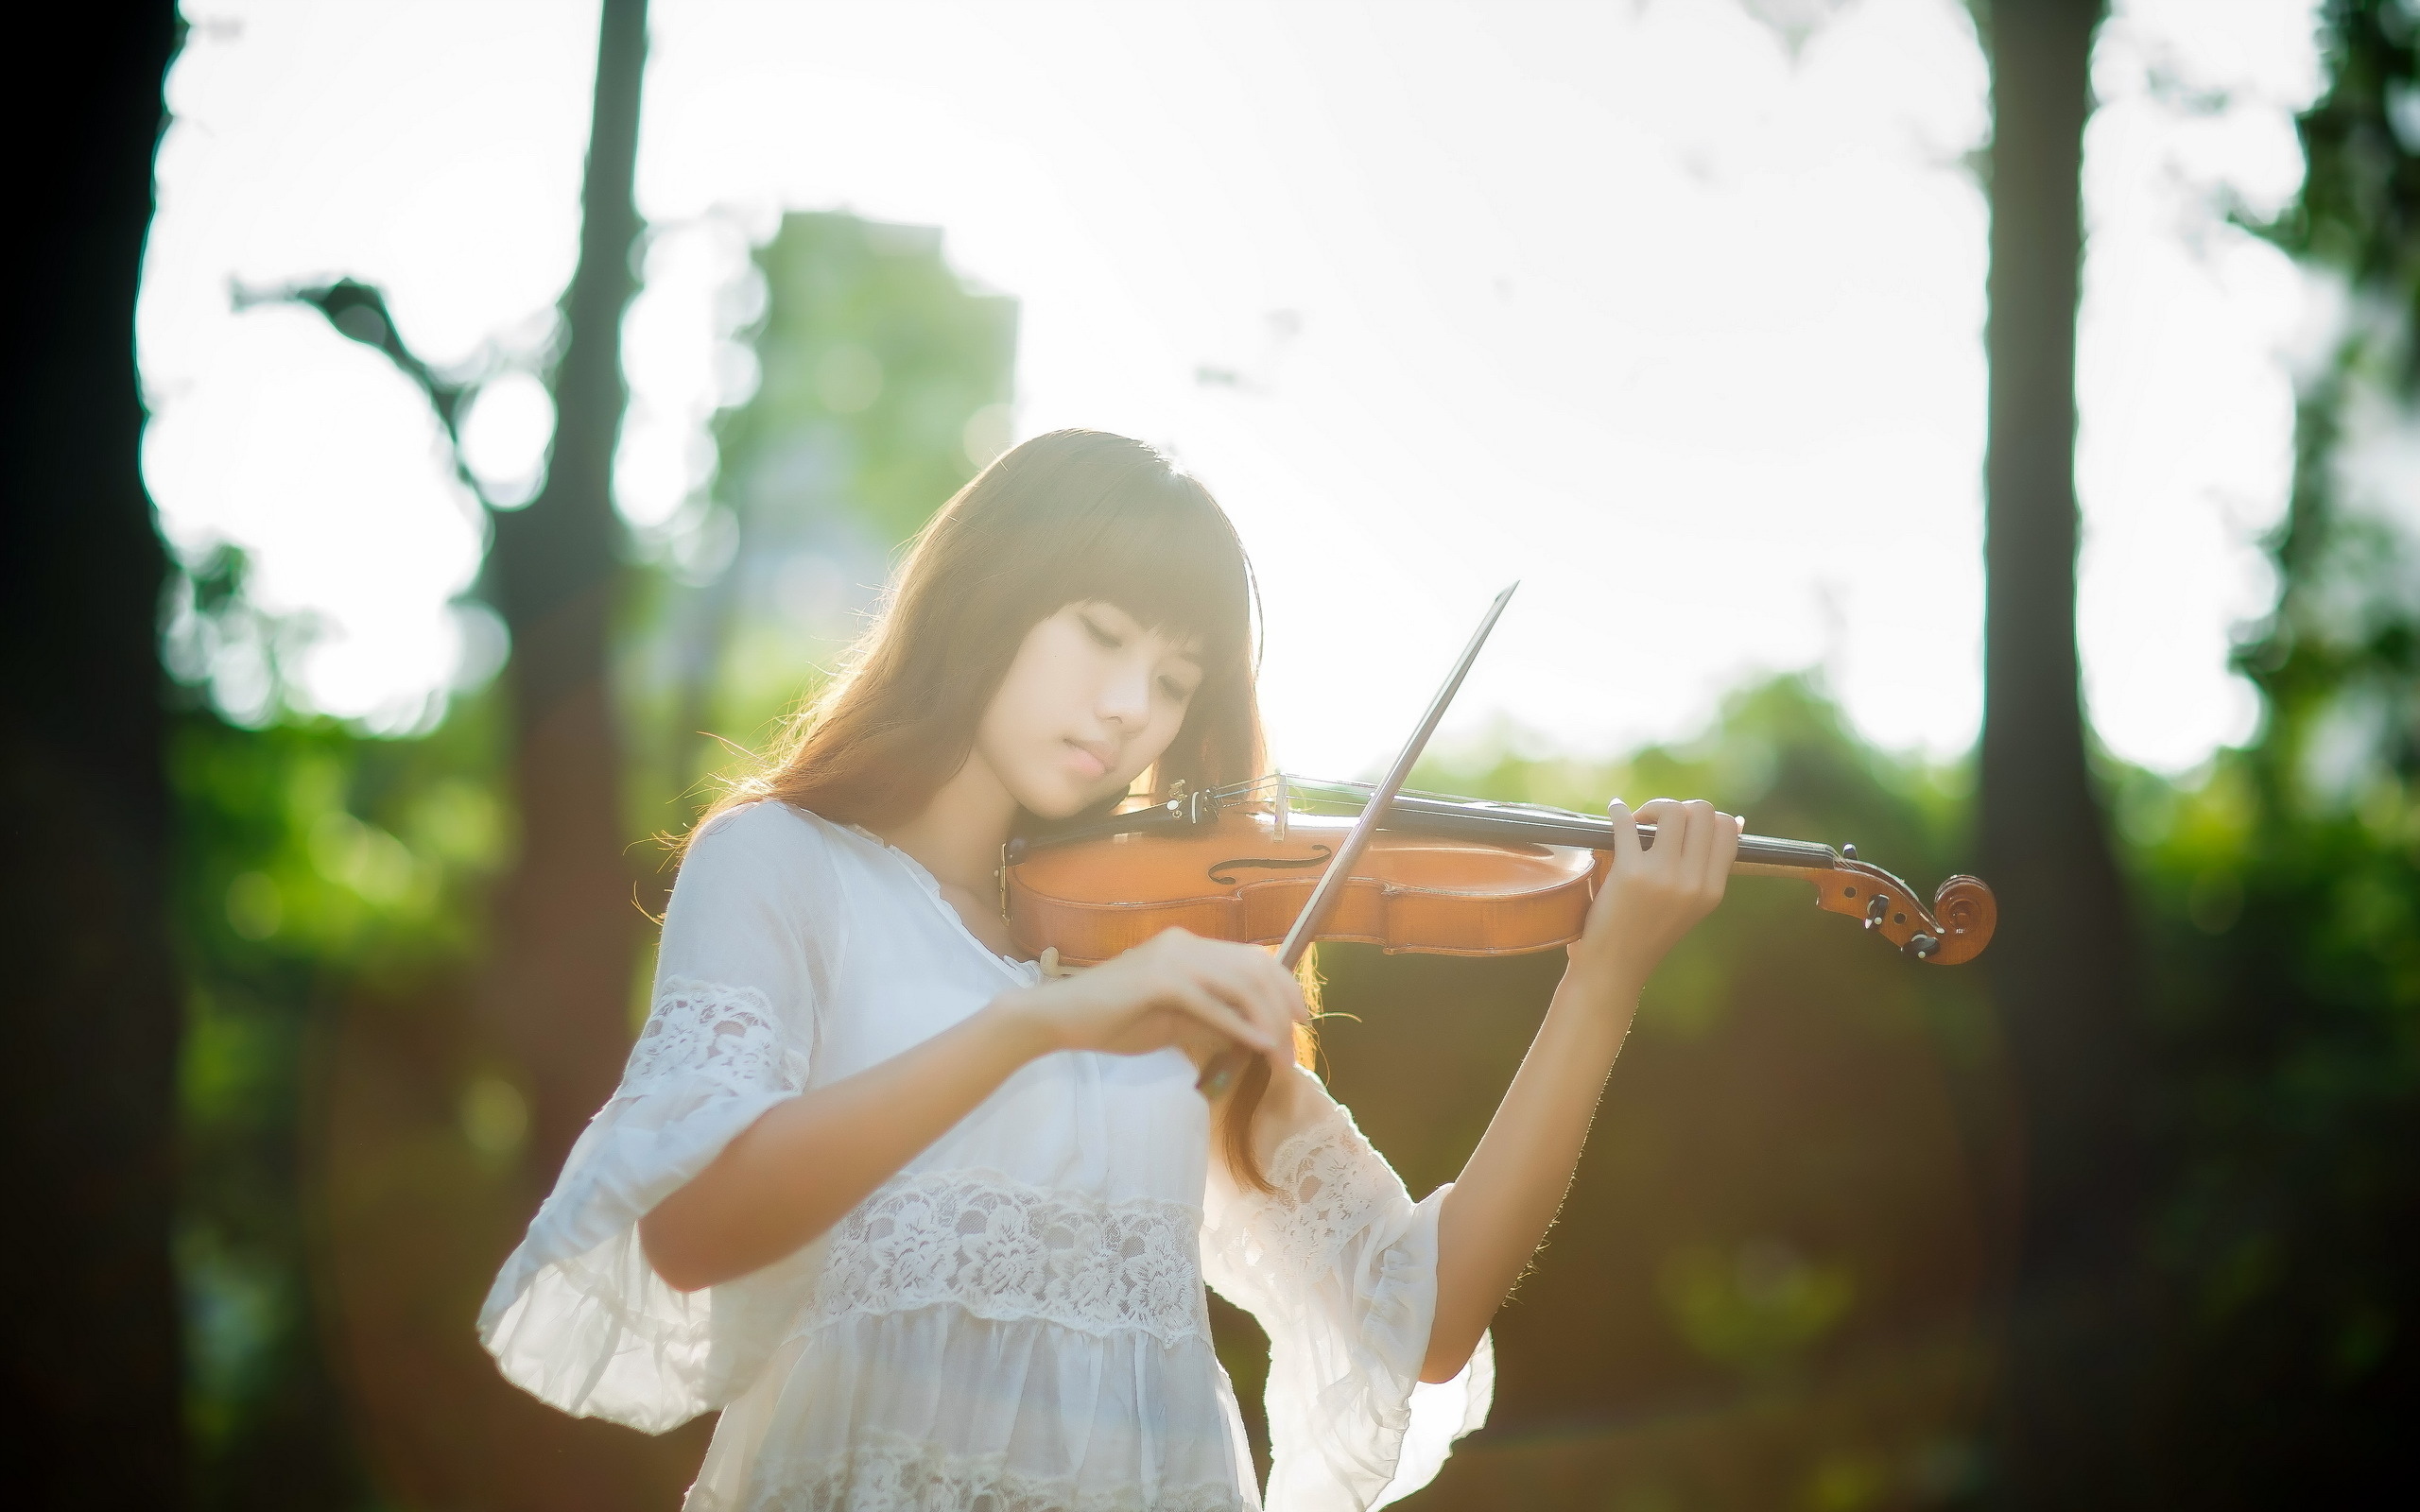 Девочка скрипачка. Девушки со скрипкой. Девочка со скрипкой. Фотосессия со скрипкой. Скрипка на природе.